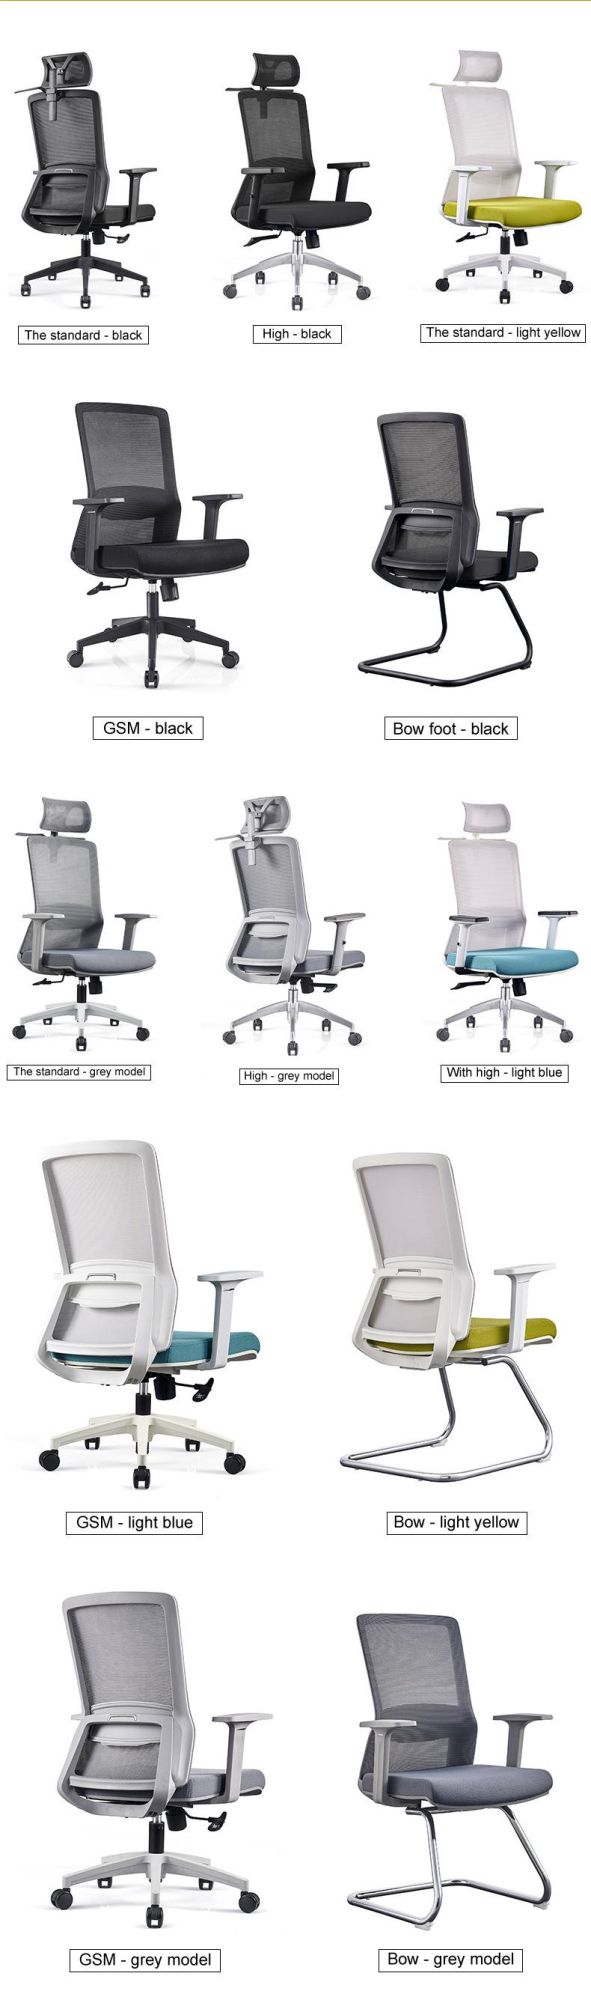 Chinese Leisure Modern Swivel Ergonomic Executive Fabric Whit Adjustable Headrest Office Chair